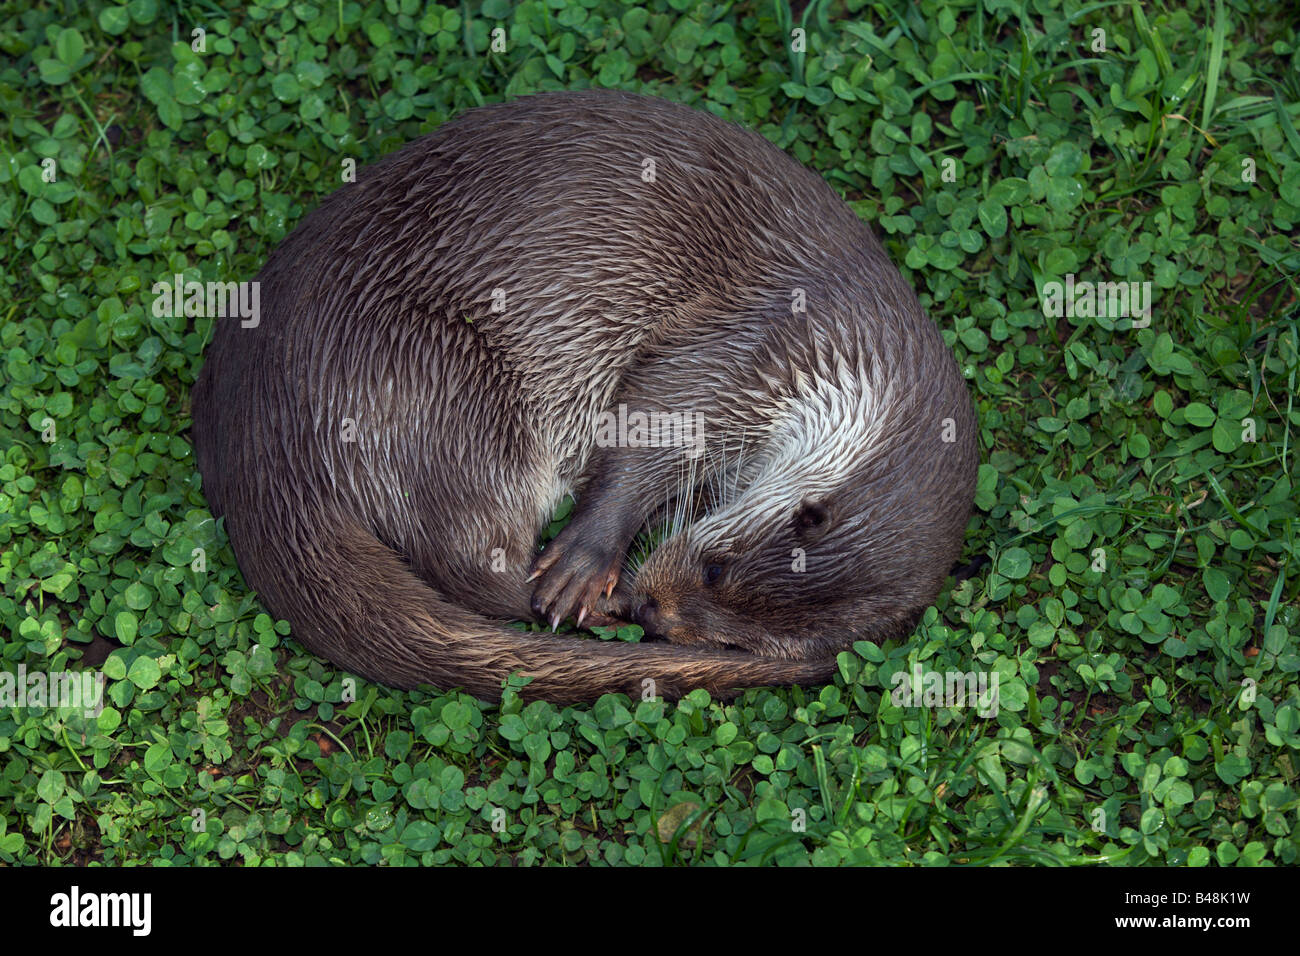 Sleeping eurasian otter Stock Photo